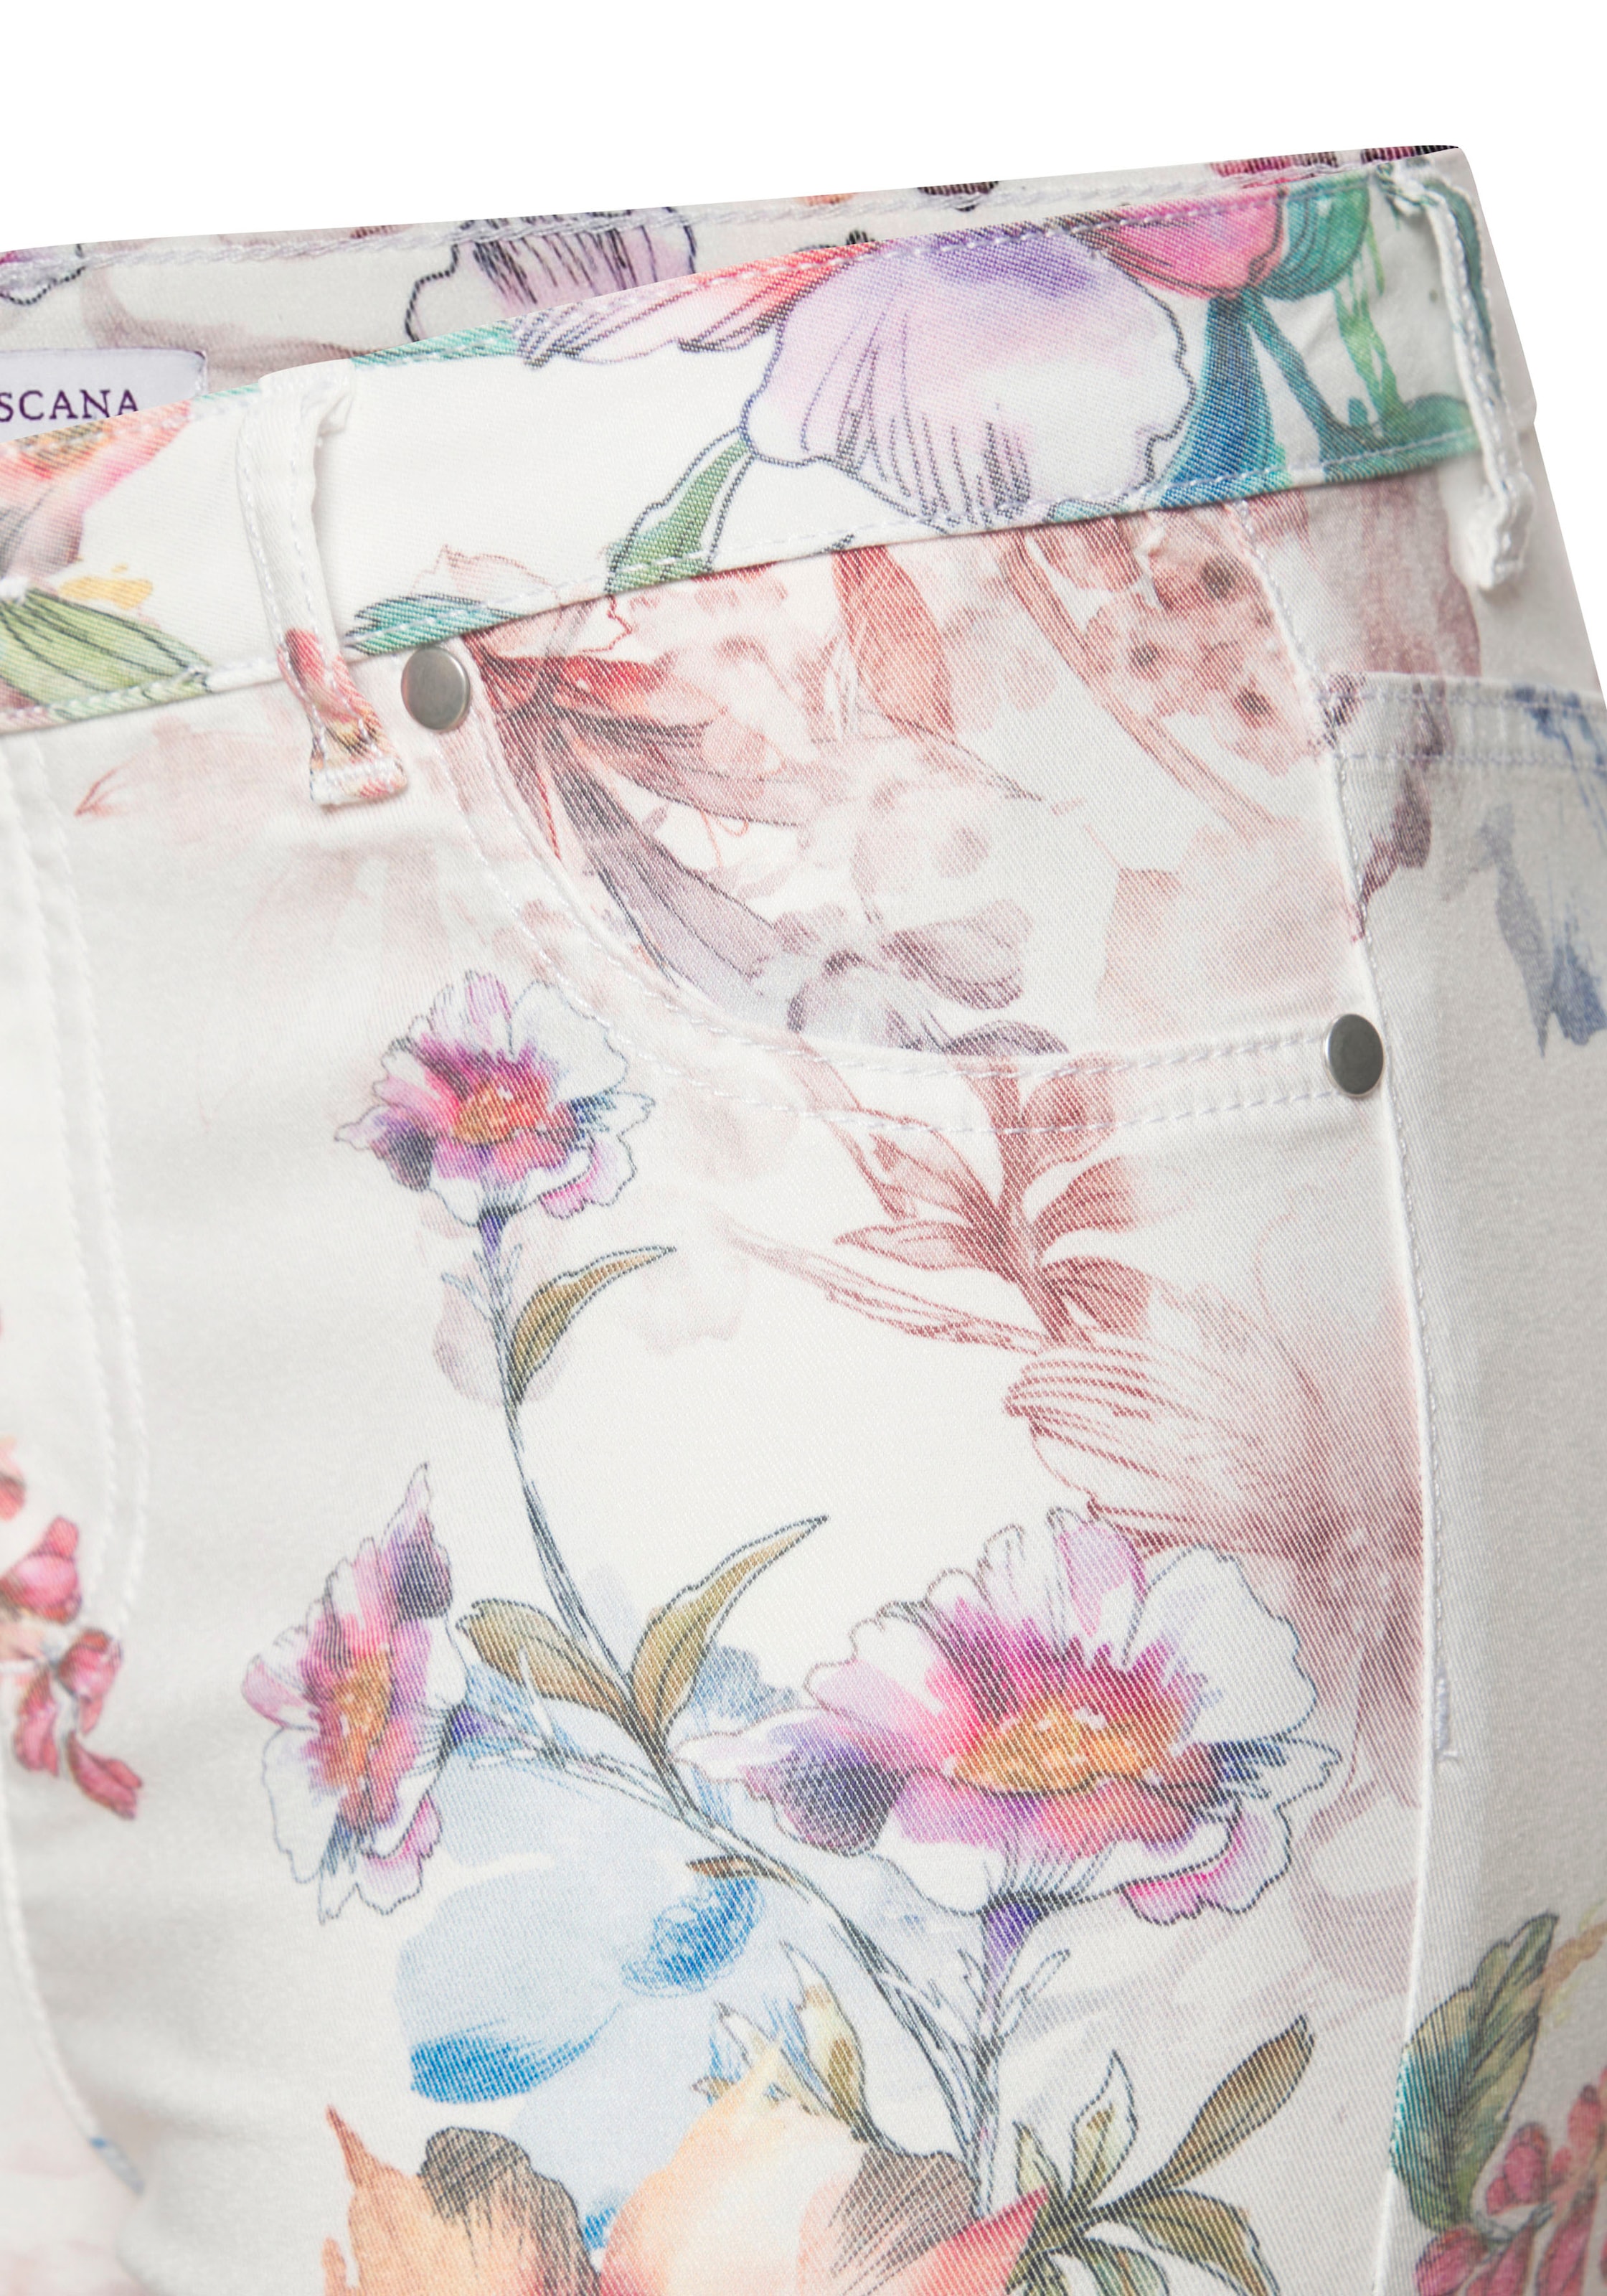 LASCANA 7/8-Jeggings, mit Blumenprint, Skinny Jeans aus elastischem Baumwoll-Mix